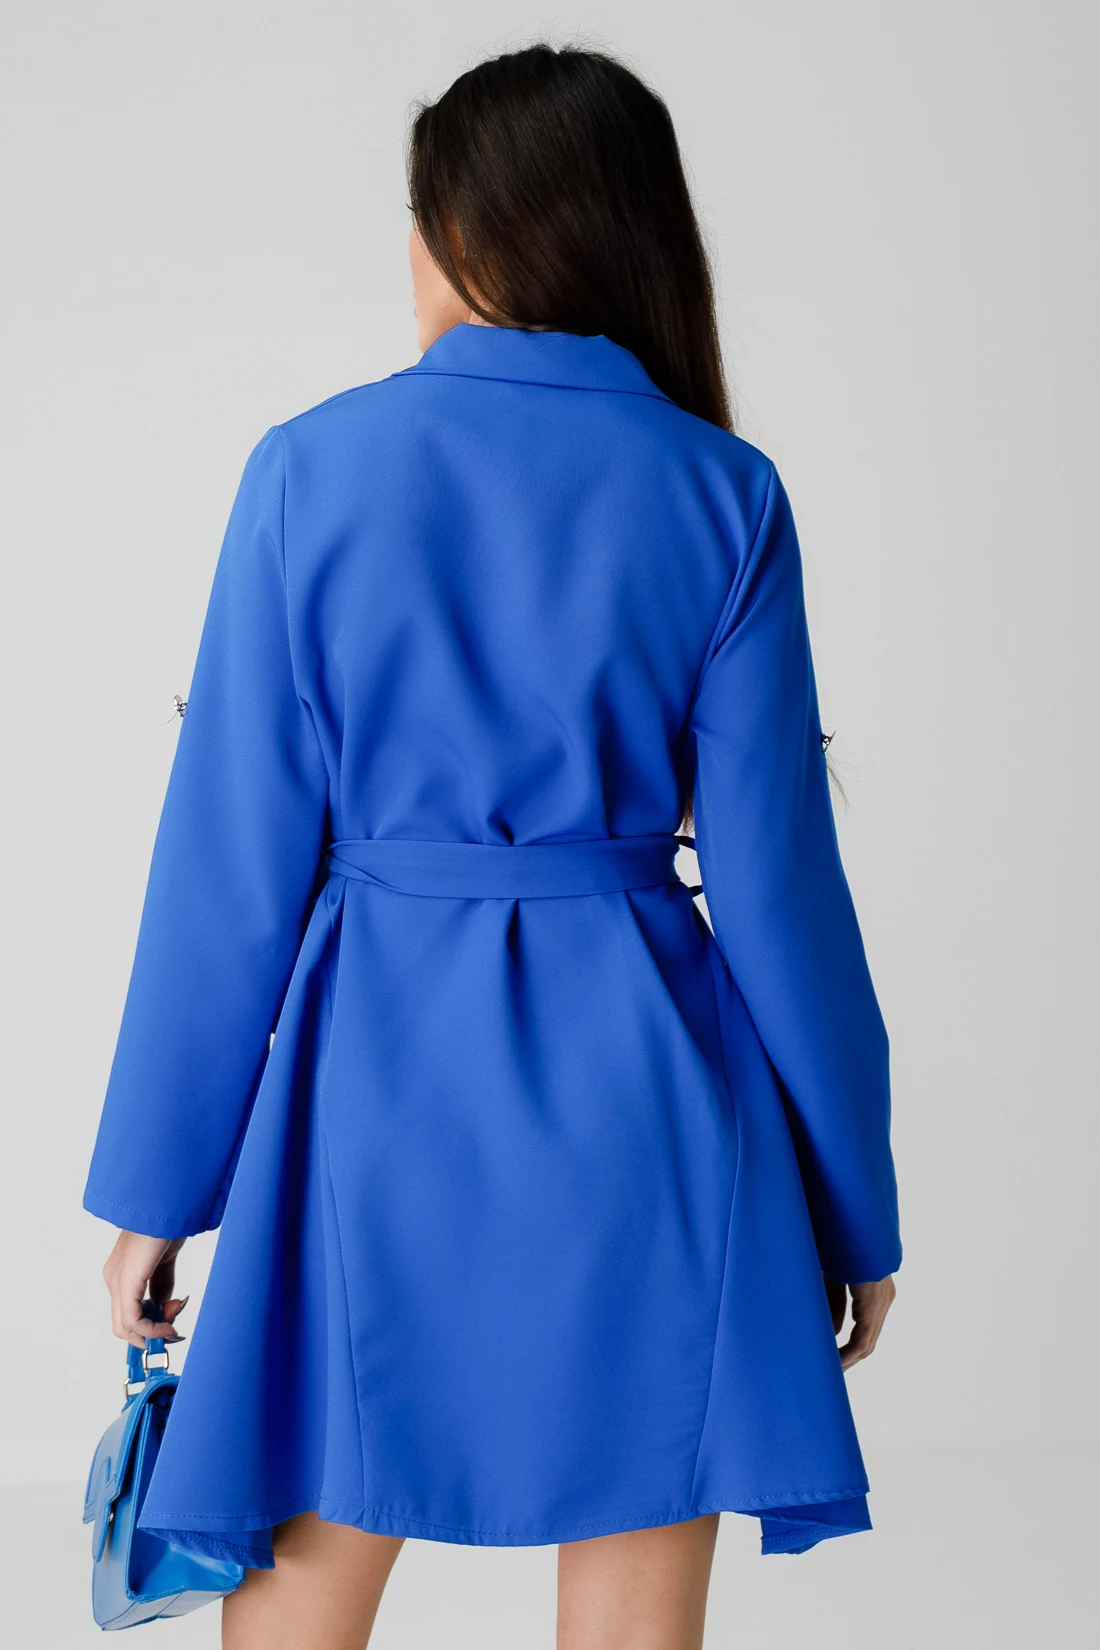 FERAL DRESS - BLUE KLEIN